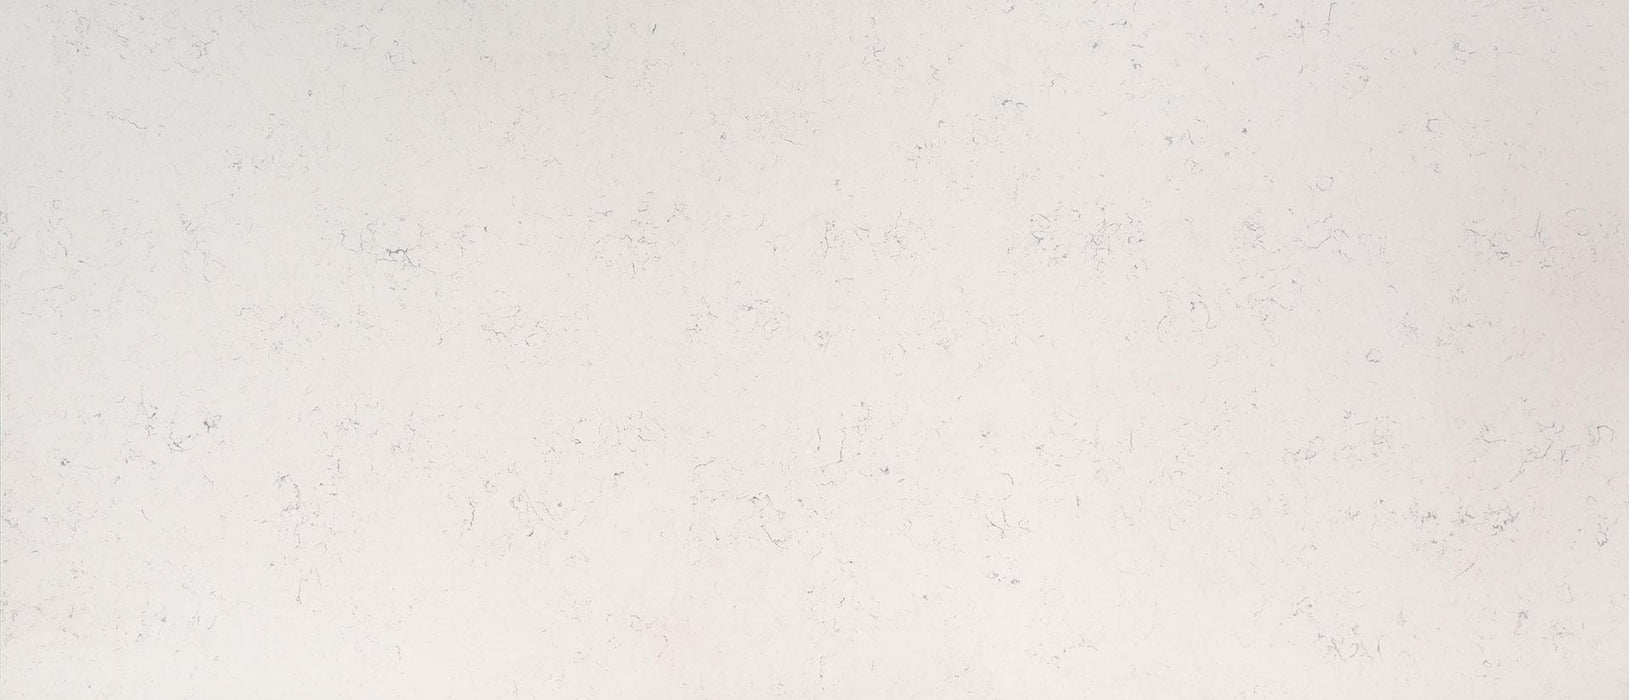 Carrara Marmi 127x75 1.5 cm Polished Quartz Slab